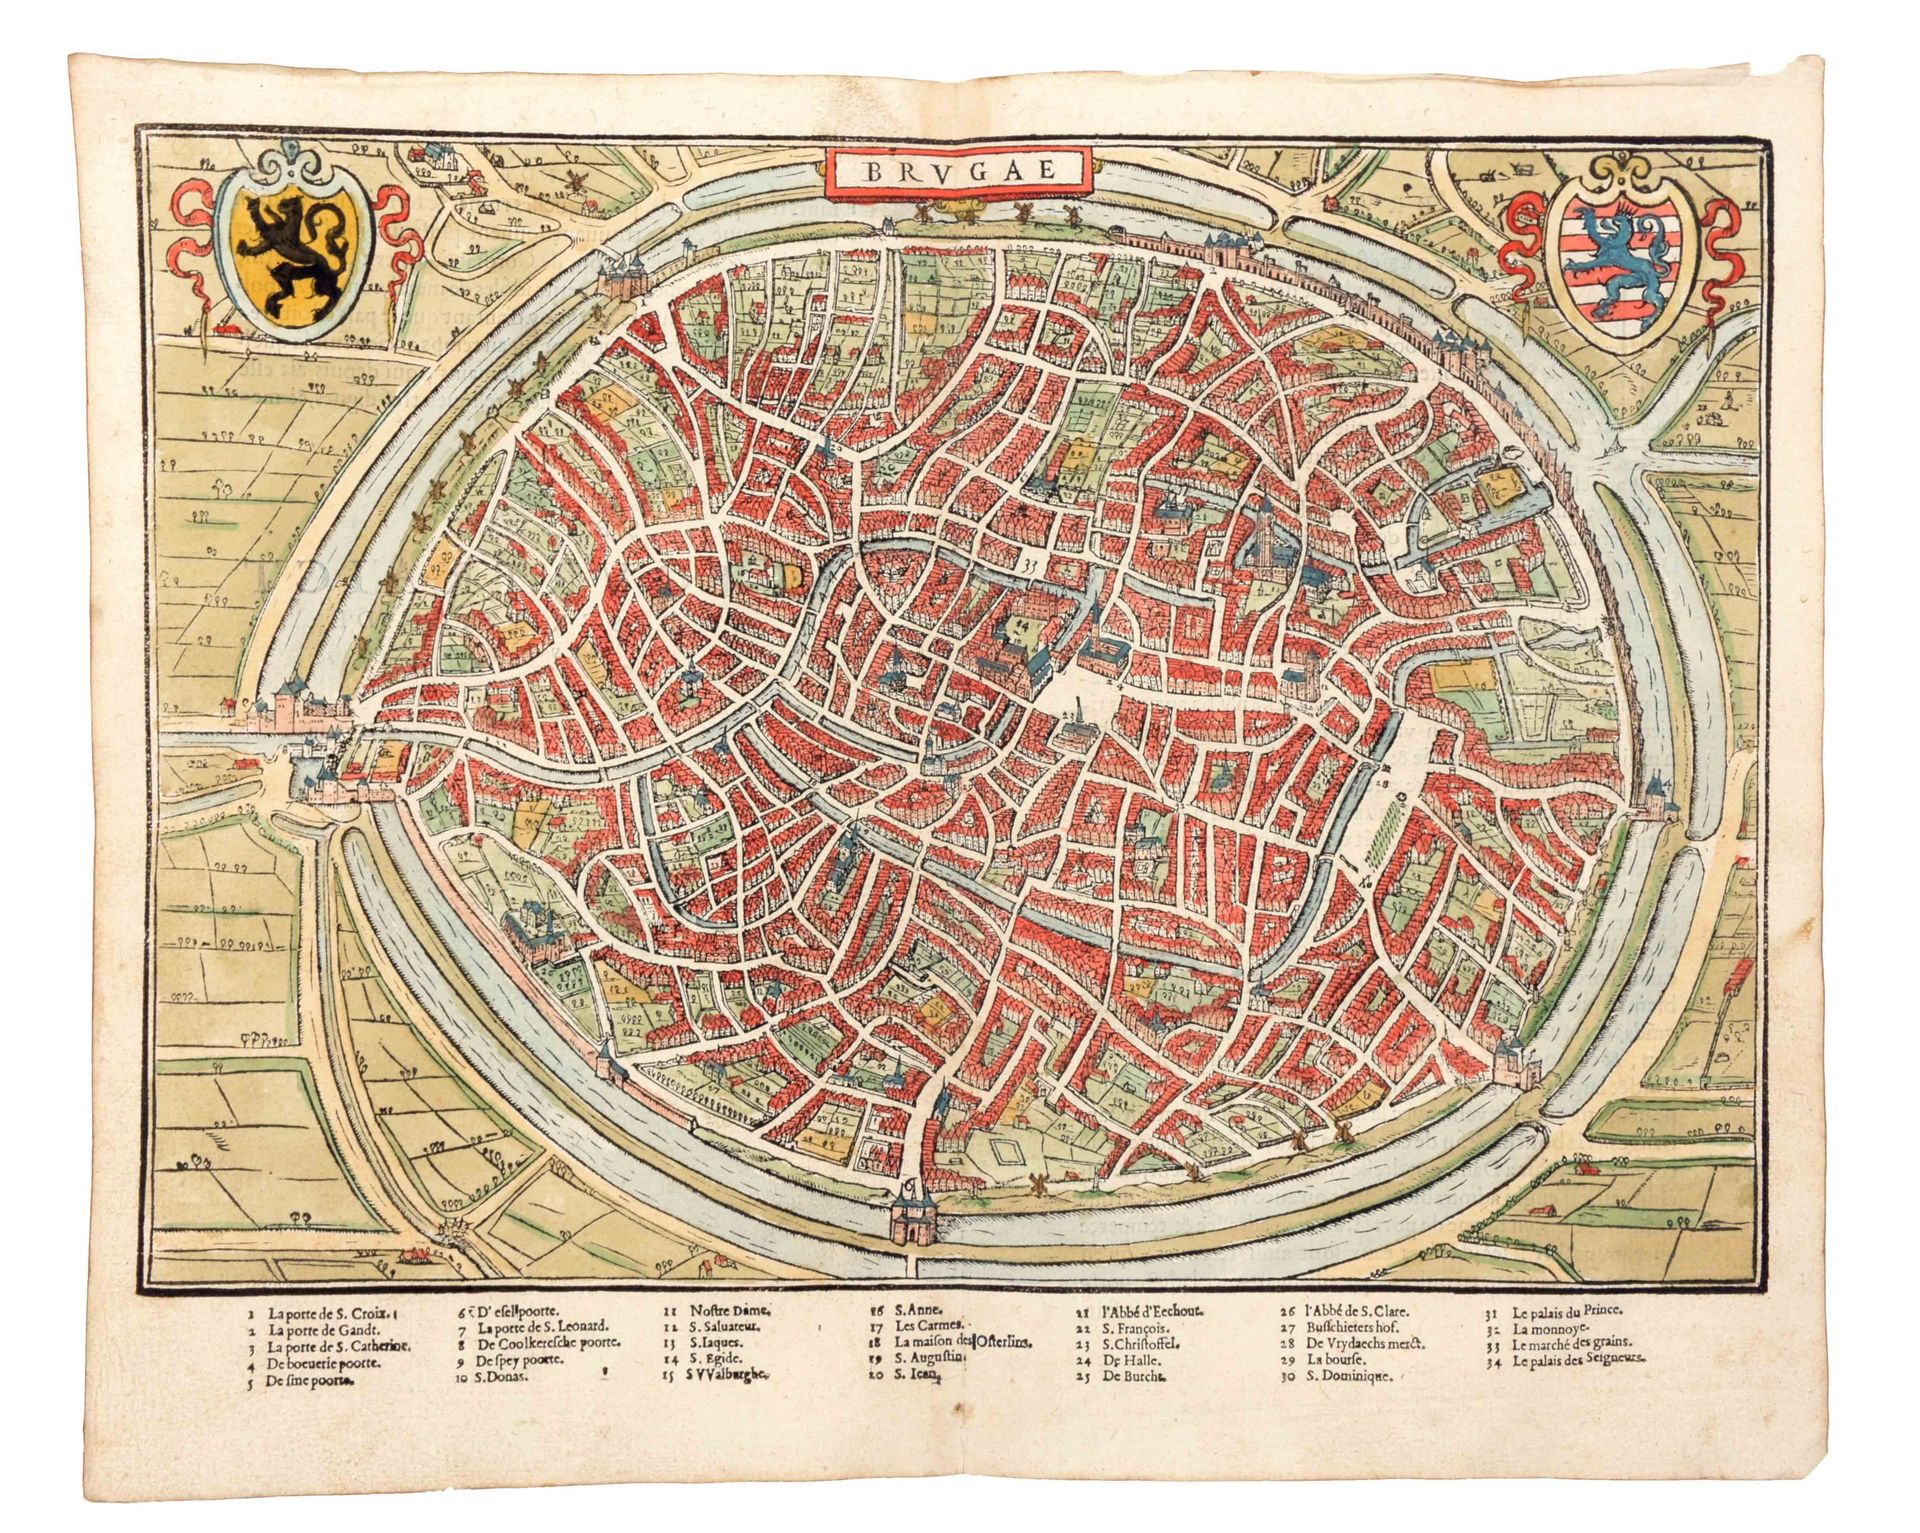 [Brugge] Brugae

Houtsnede (26.5 x 34.5 cm) met plattegrond van de stad uit Guic&hellip;